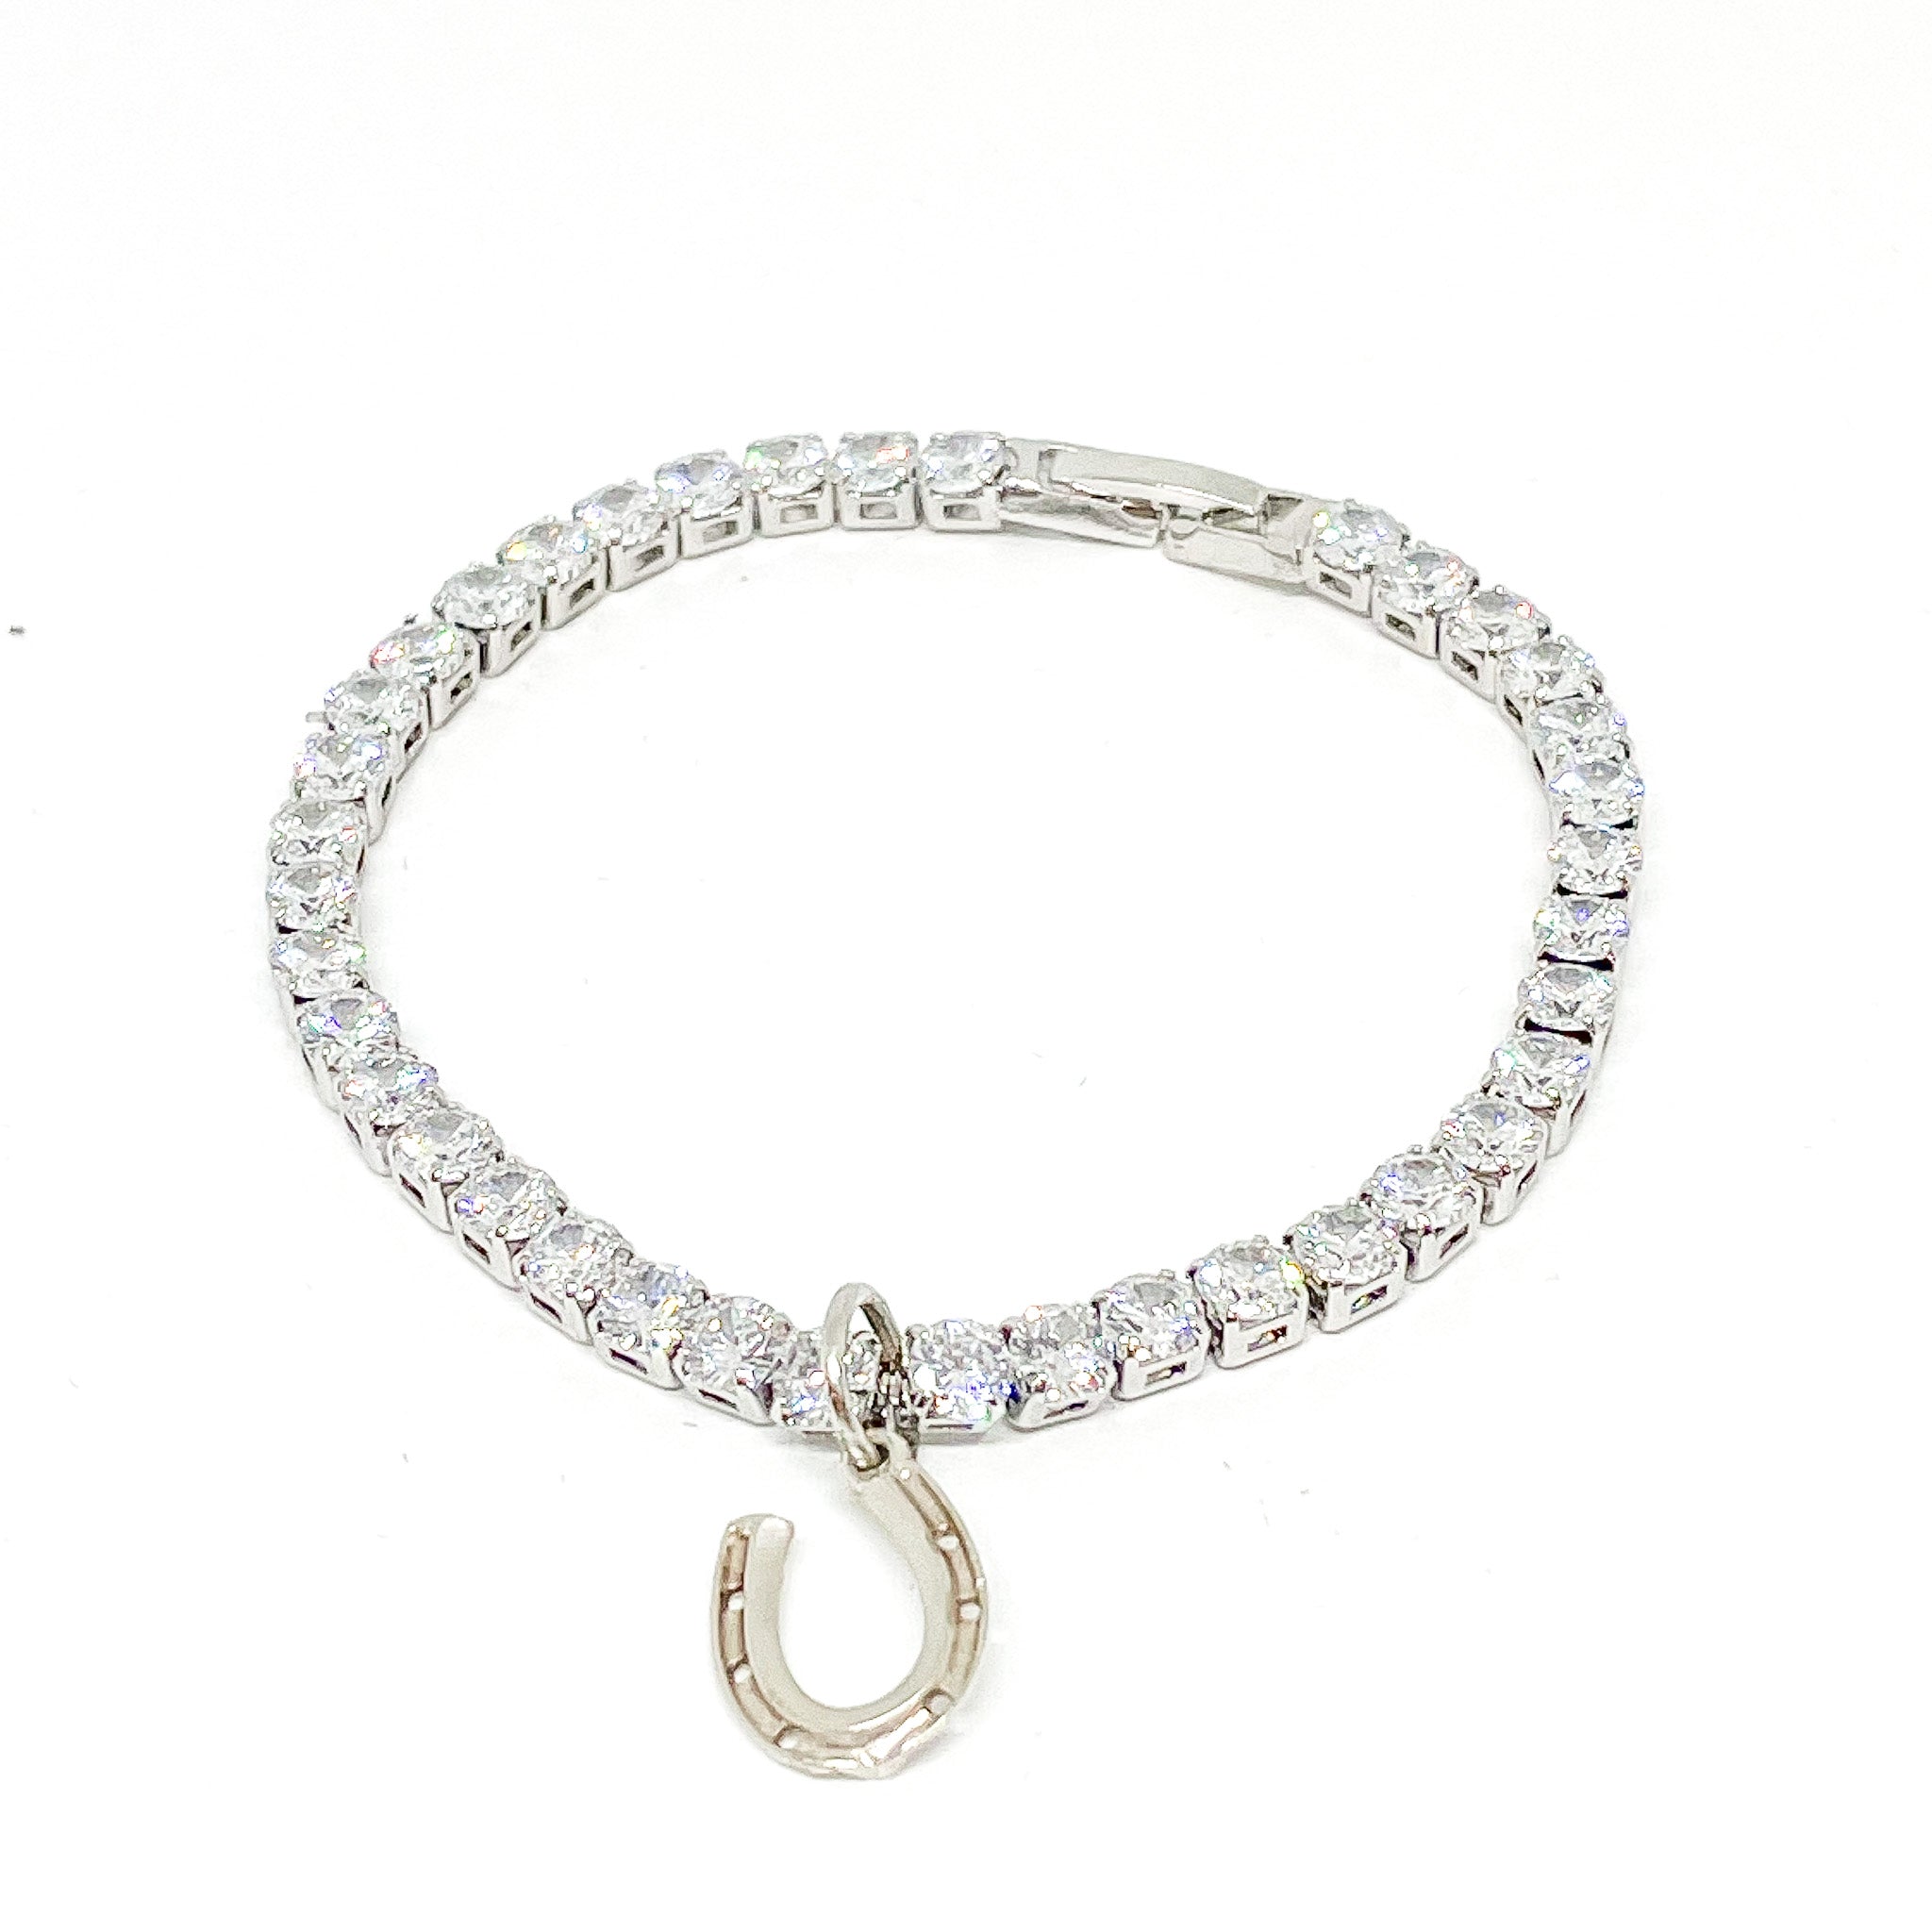 Swarovski crystal silver bracelet with horse shoe